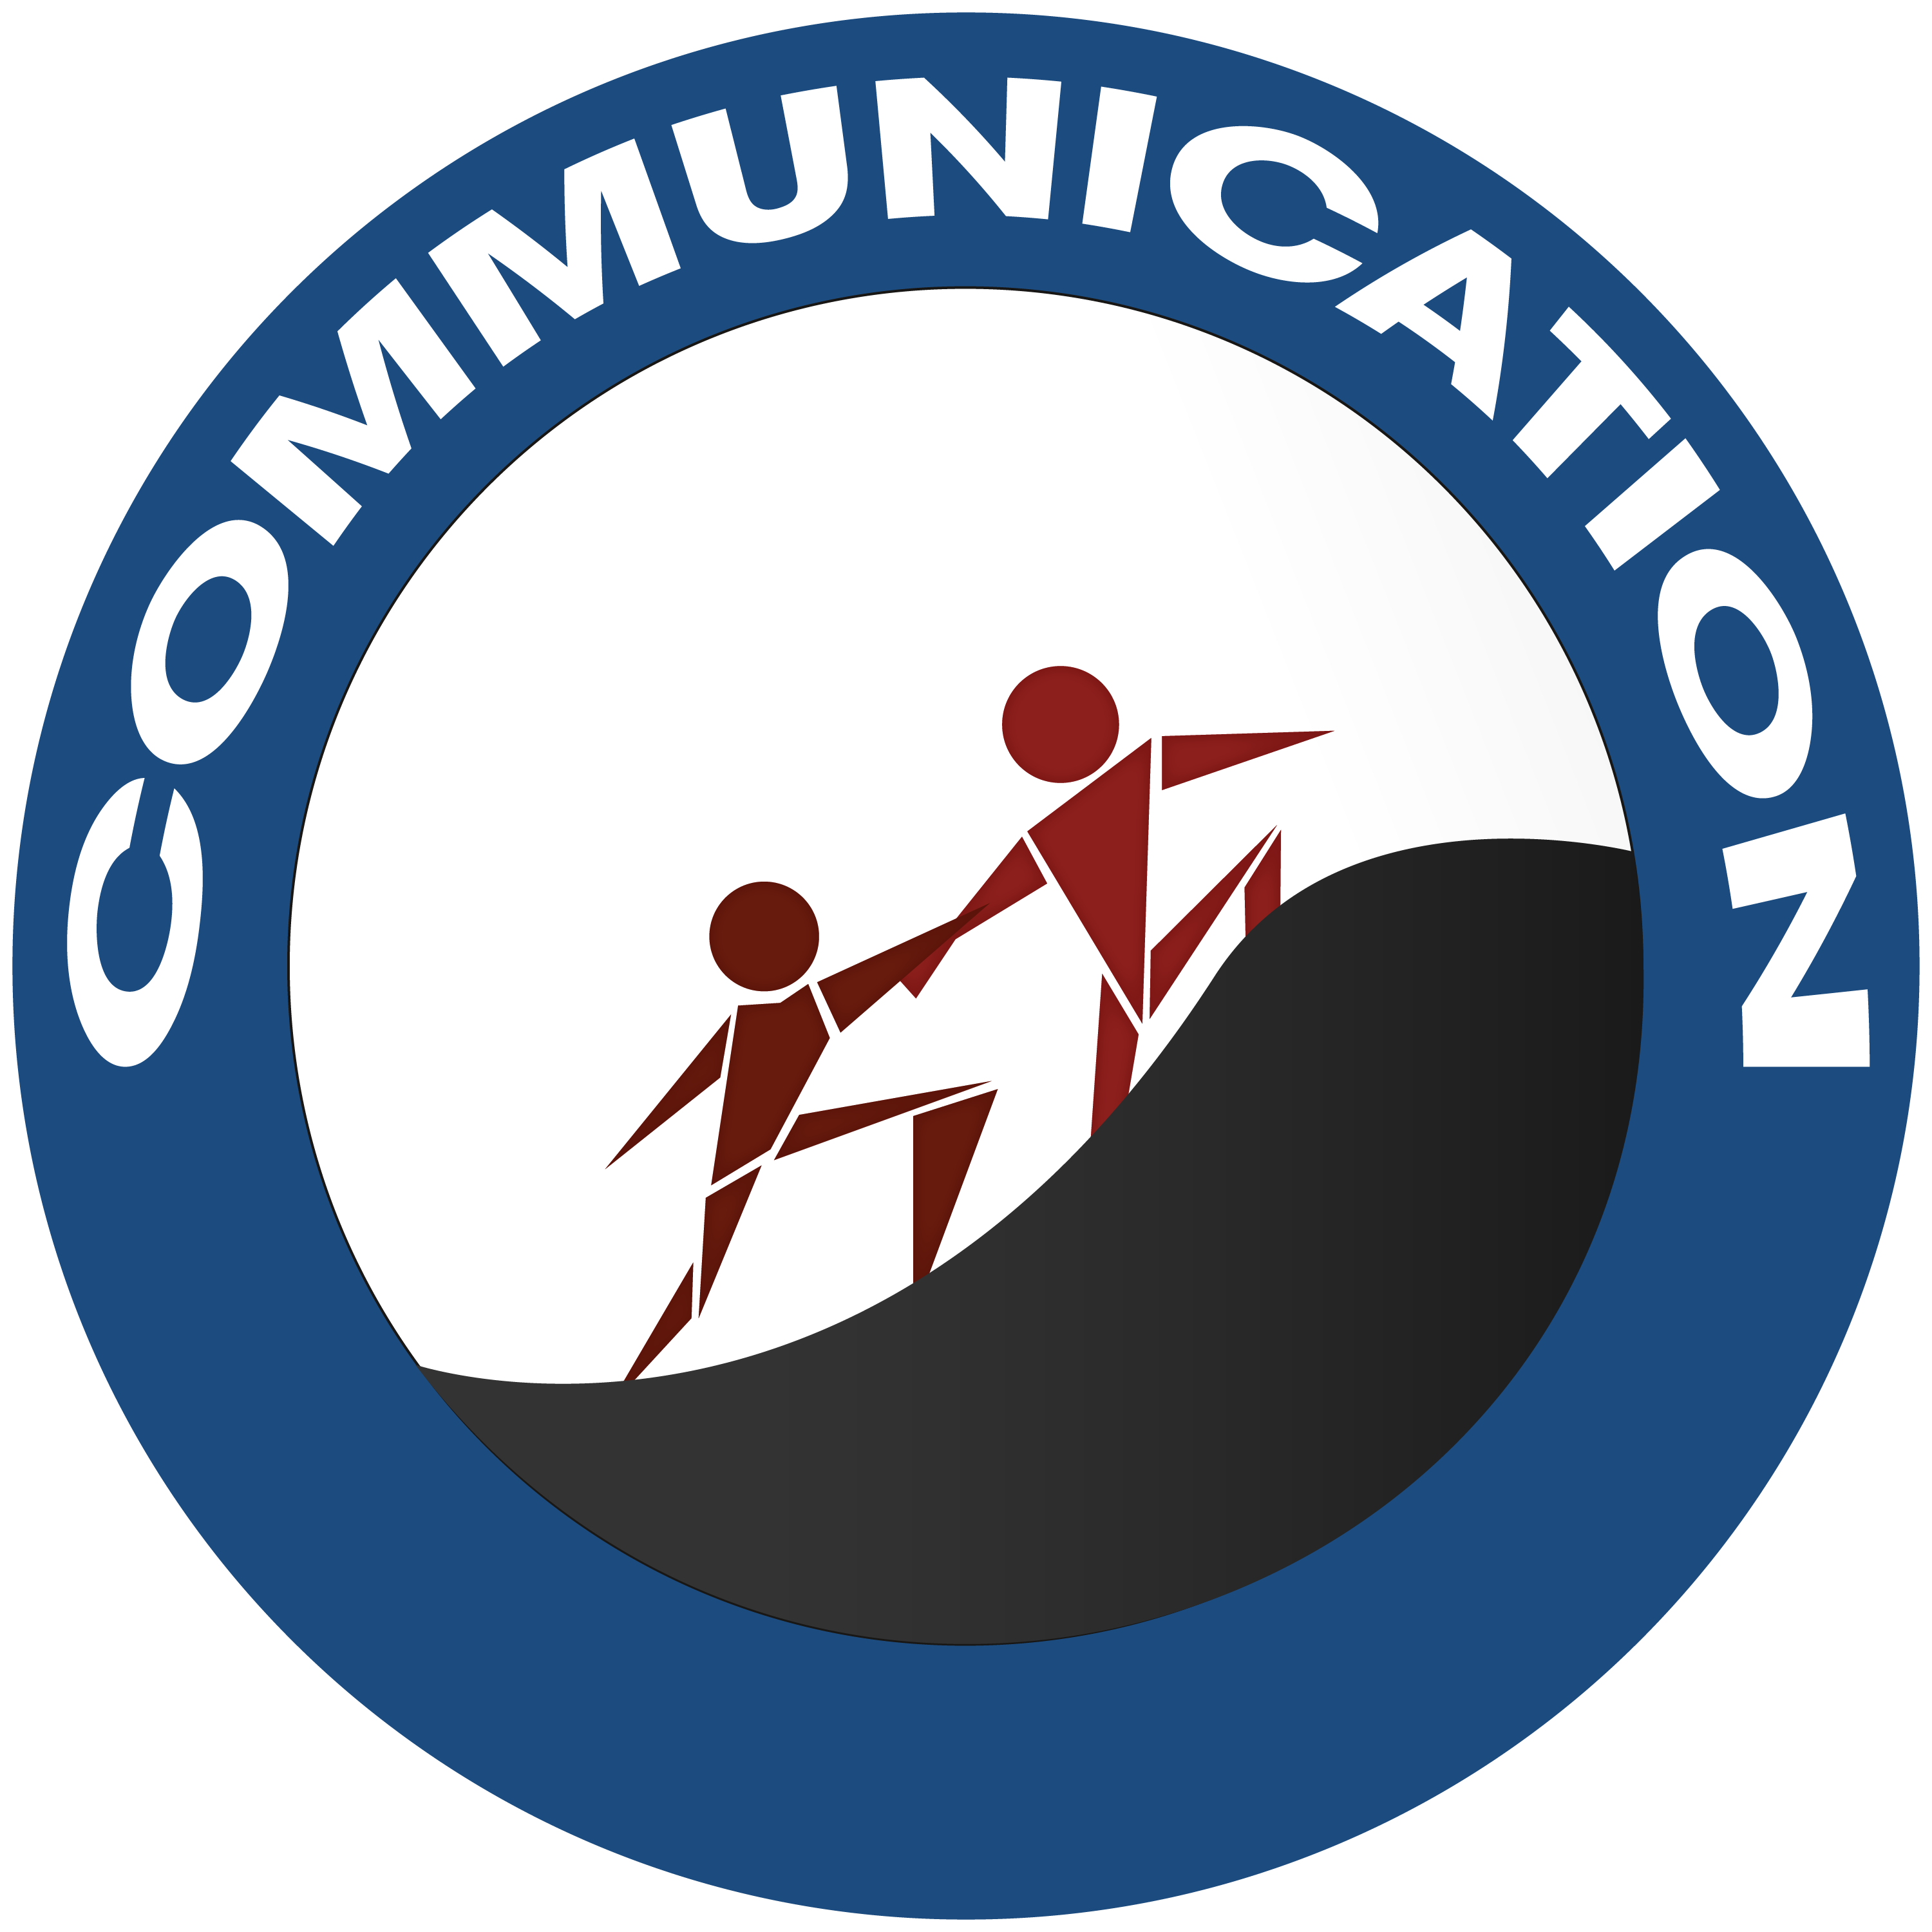 Communication-01